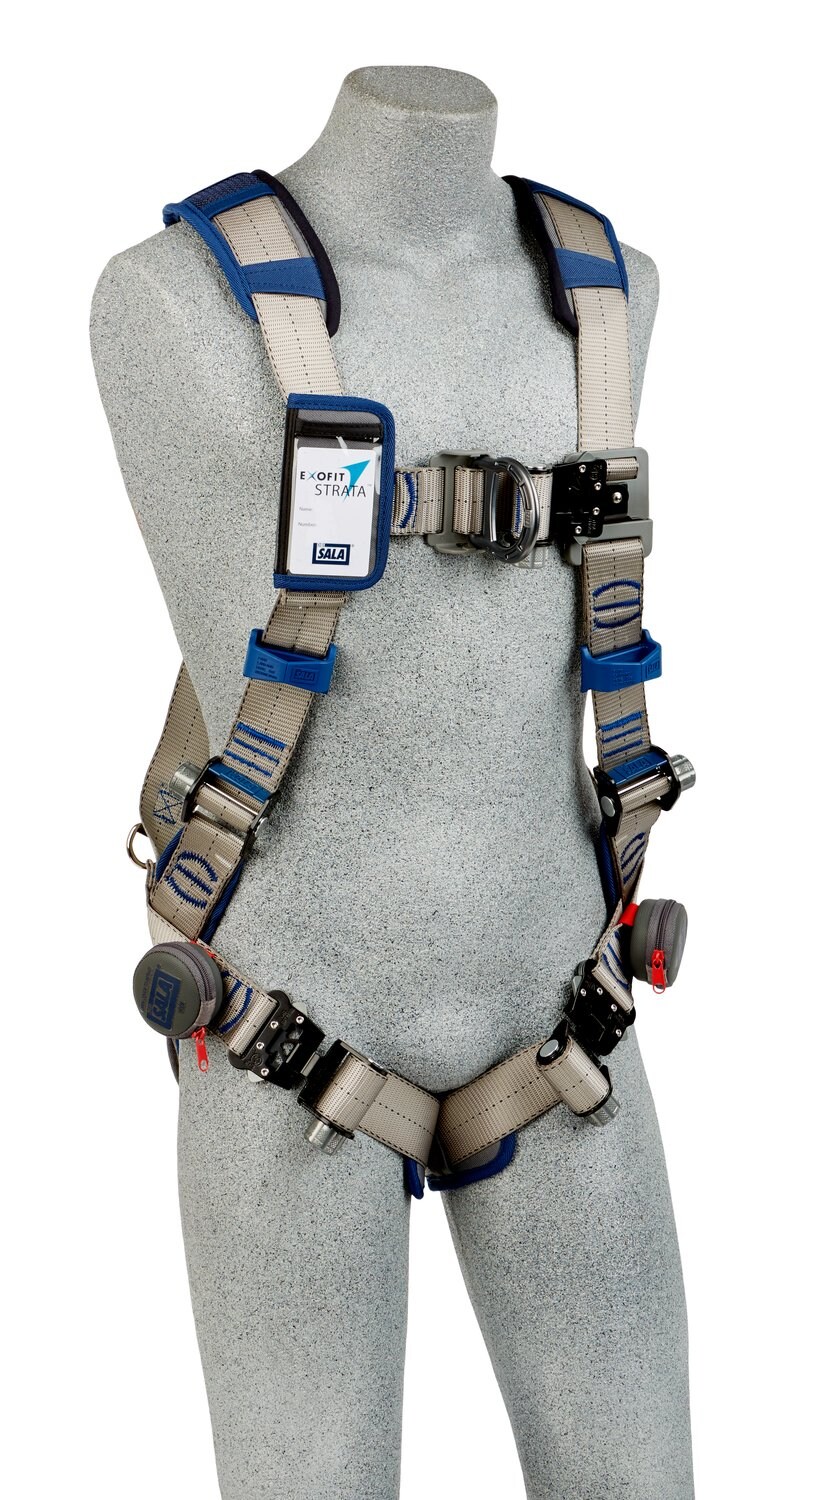 7100217303 - 3M DBI-SALA ExoFit STRATA Comfort Vest Climbing Safety Harness
1112486, Medium